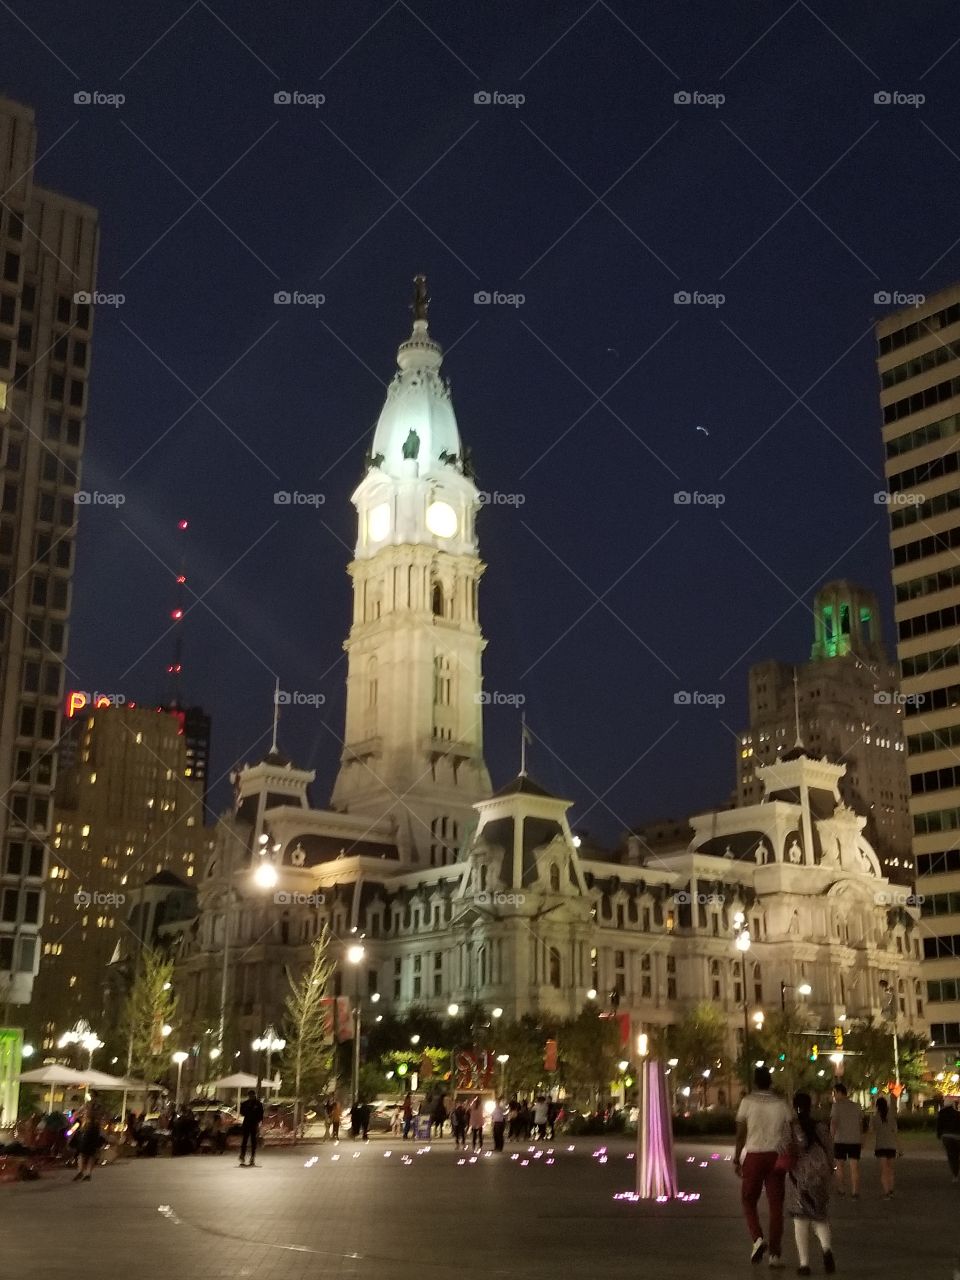 Downtown Philadelphia after dark